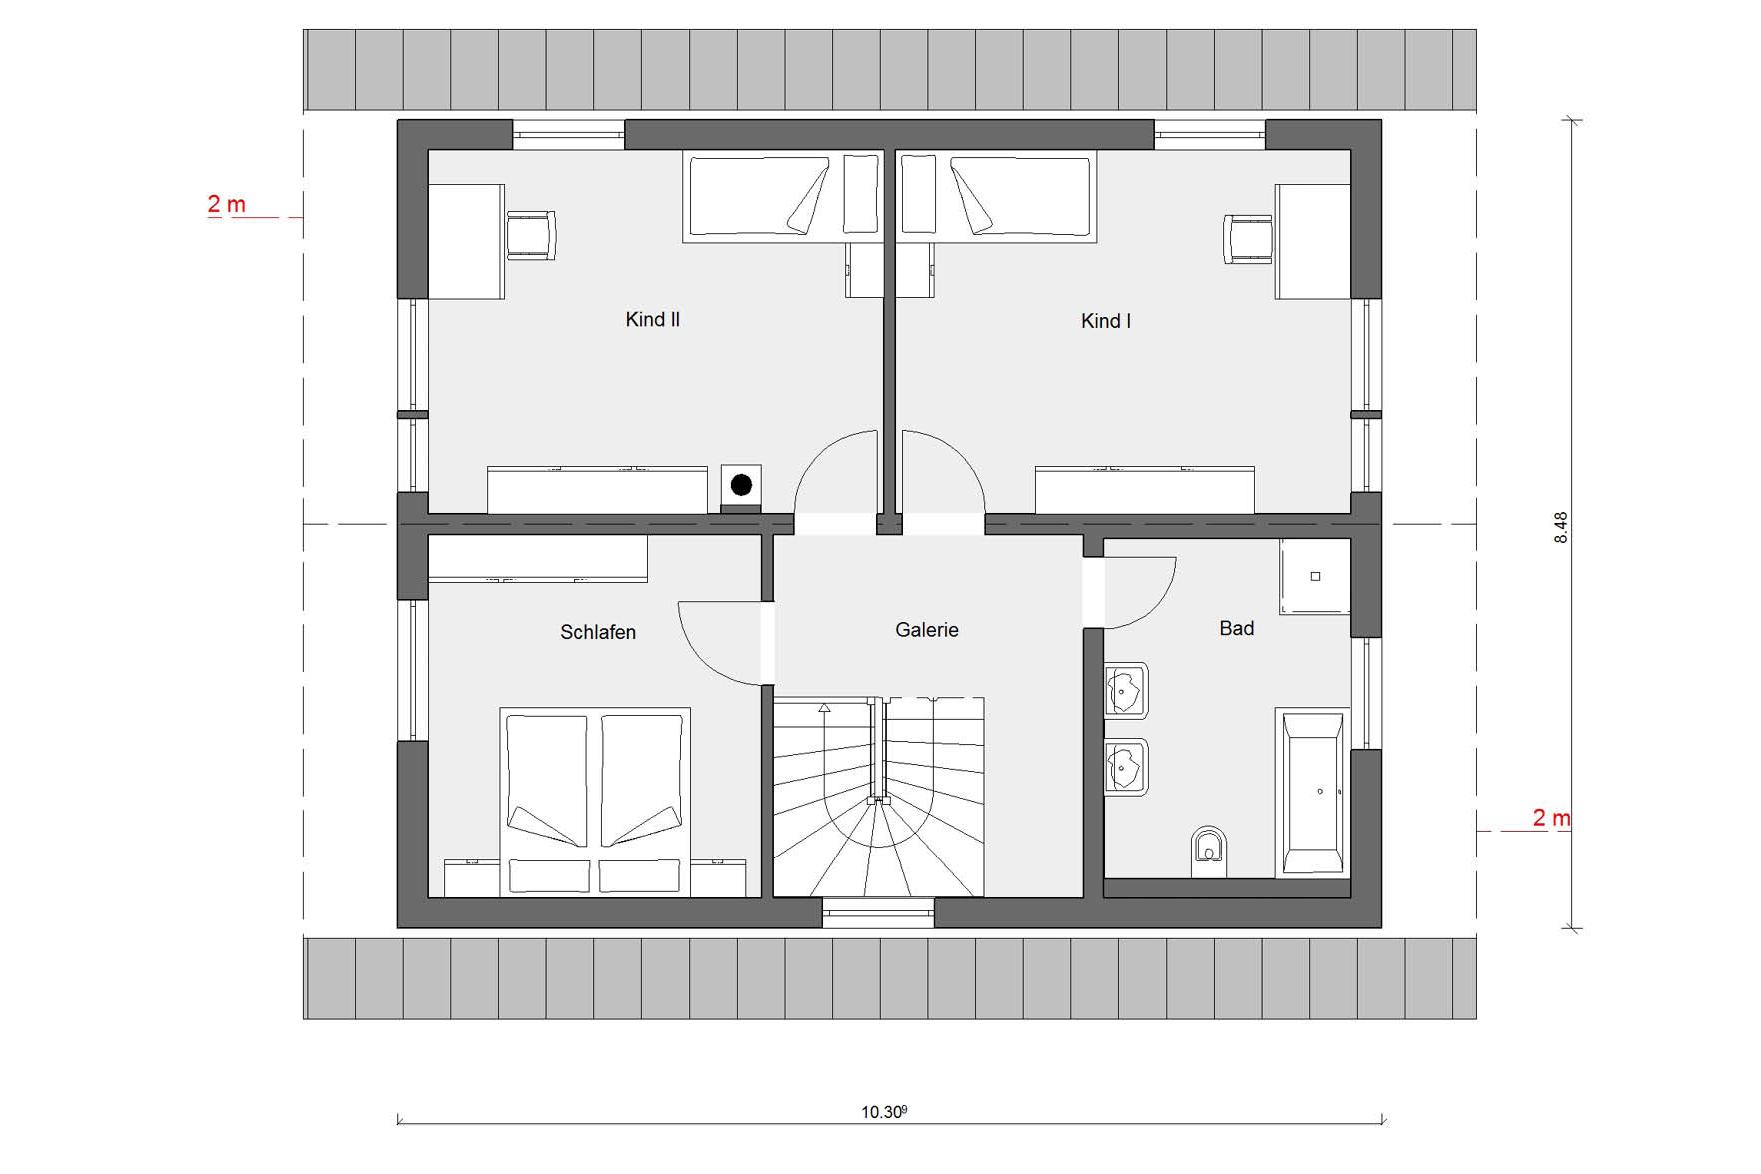 Ground floor attic E 15-143.19 detached single-family house